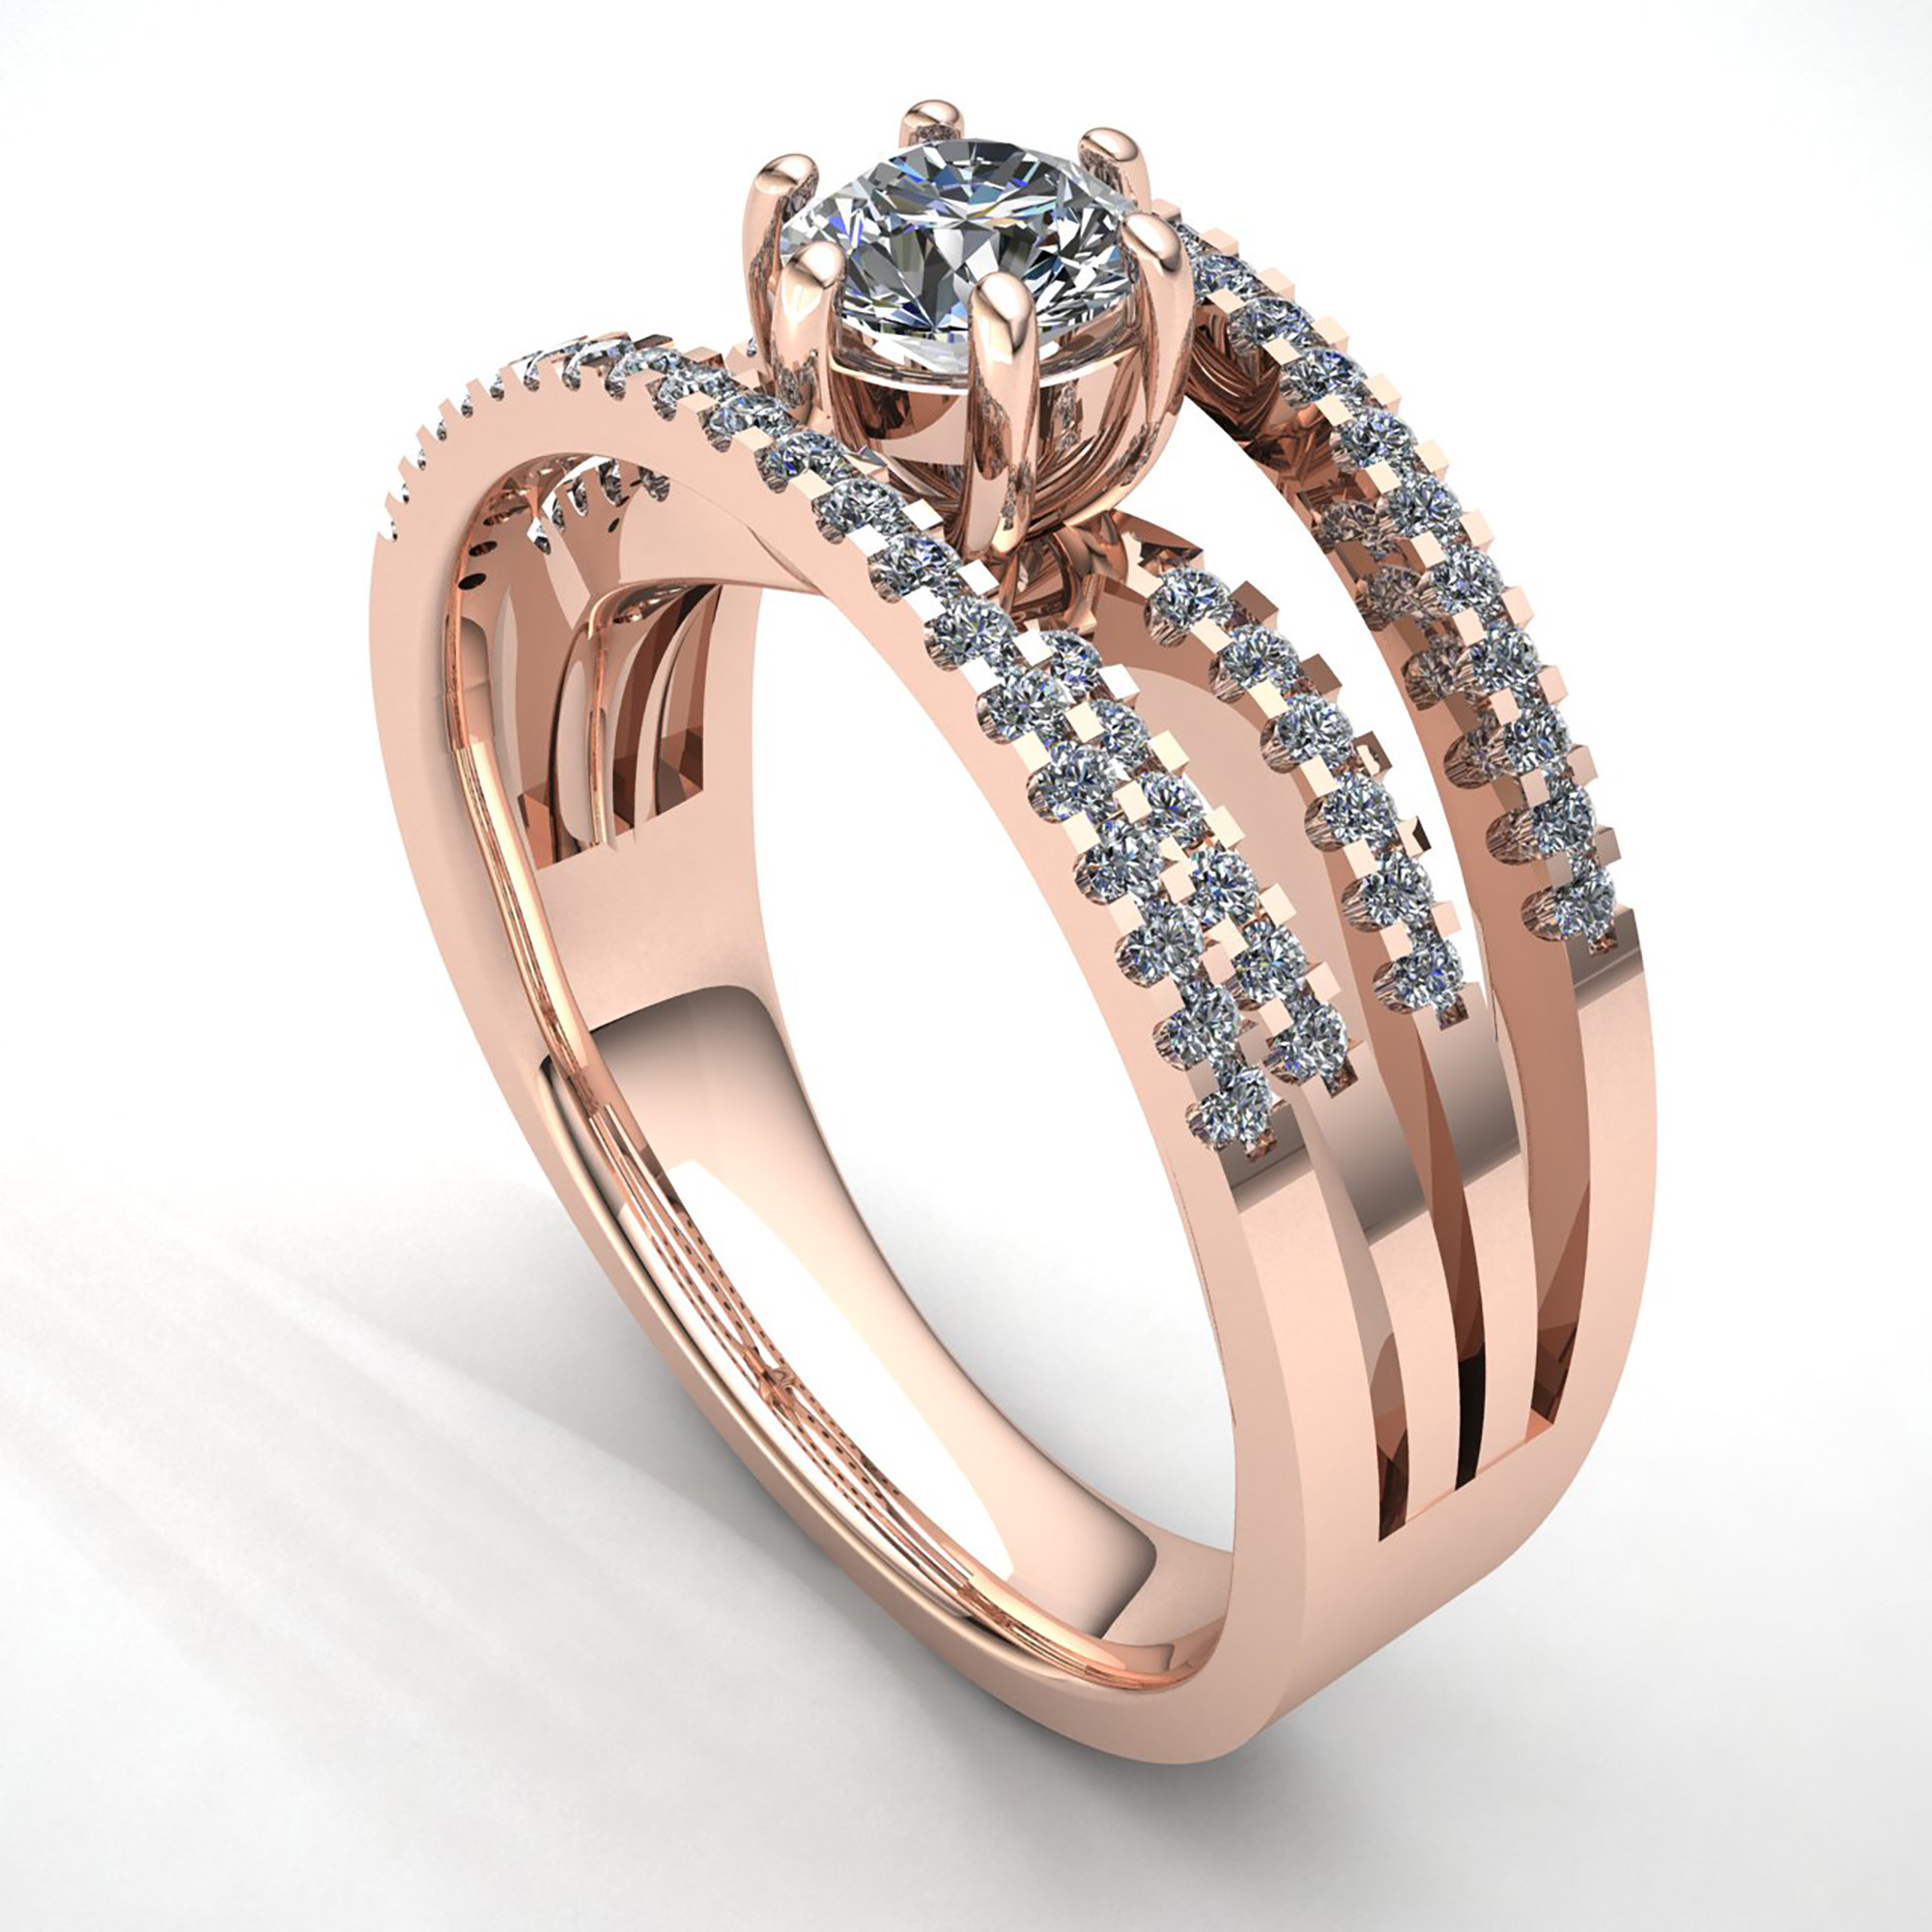 5ct Diamond Engagement Rings
 Genuine 5ct Round Cut Diamond Mens Bridal Solitaire